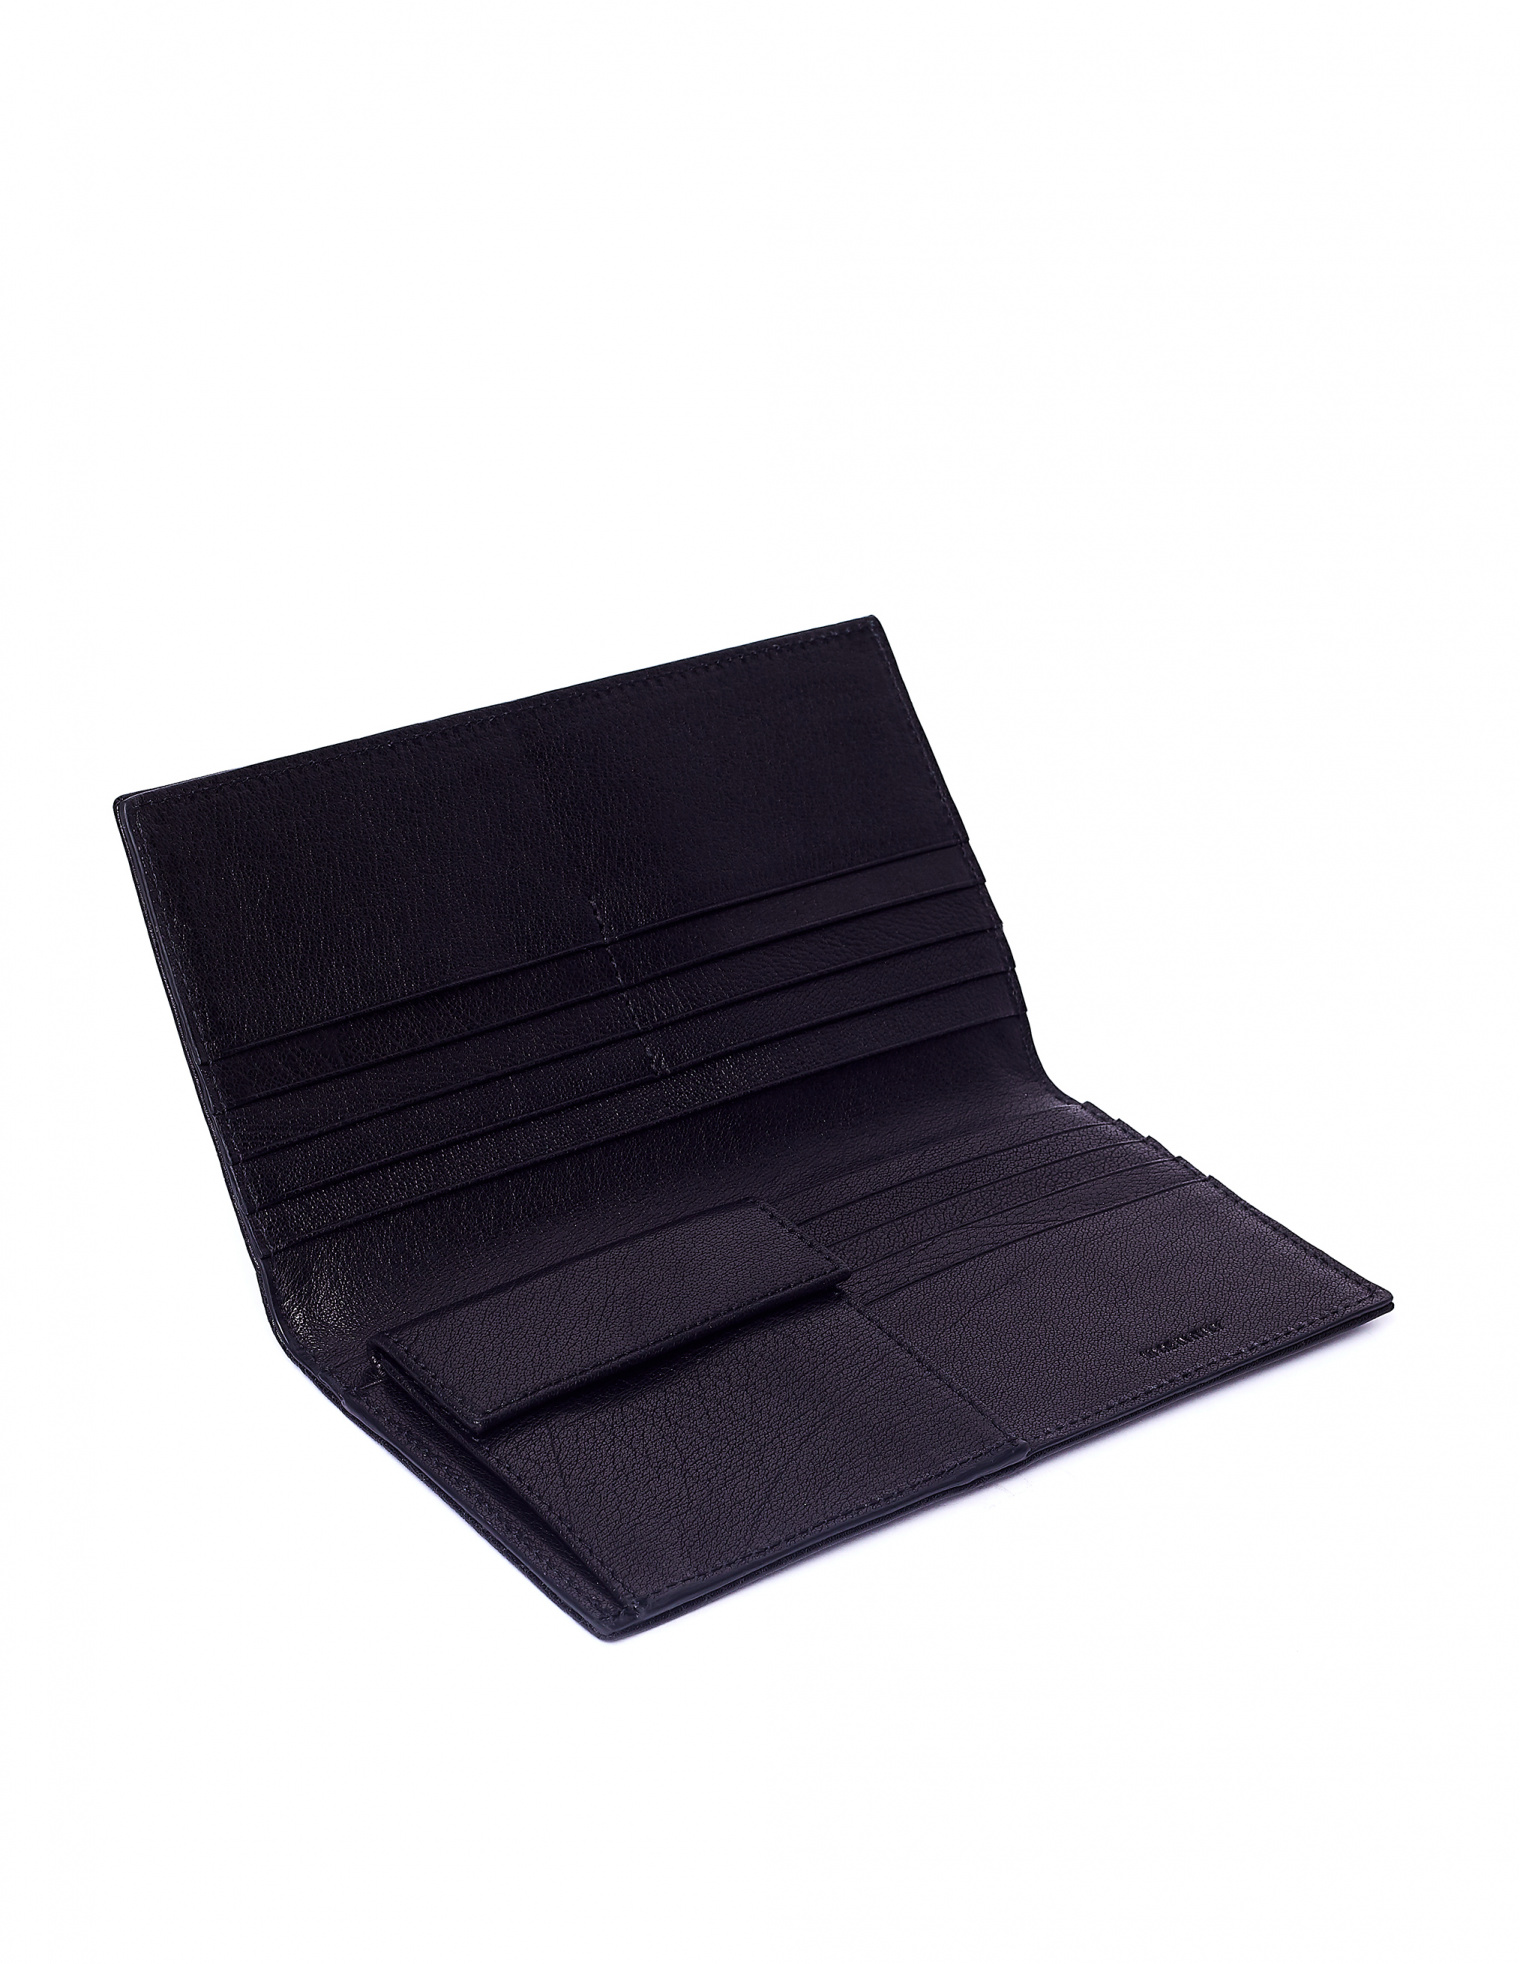 Ugo Cacciatori Black Grained Leather Long Pocket Wallet